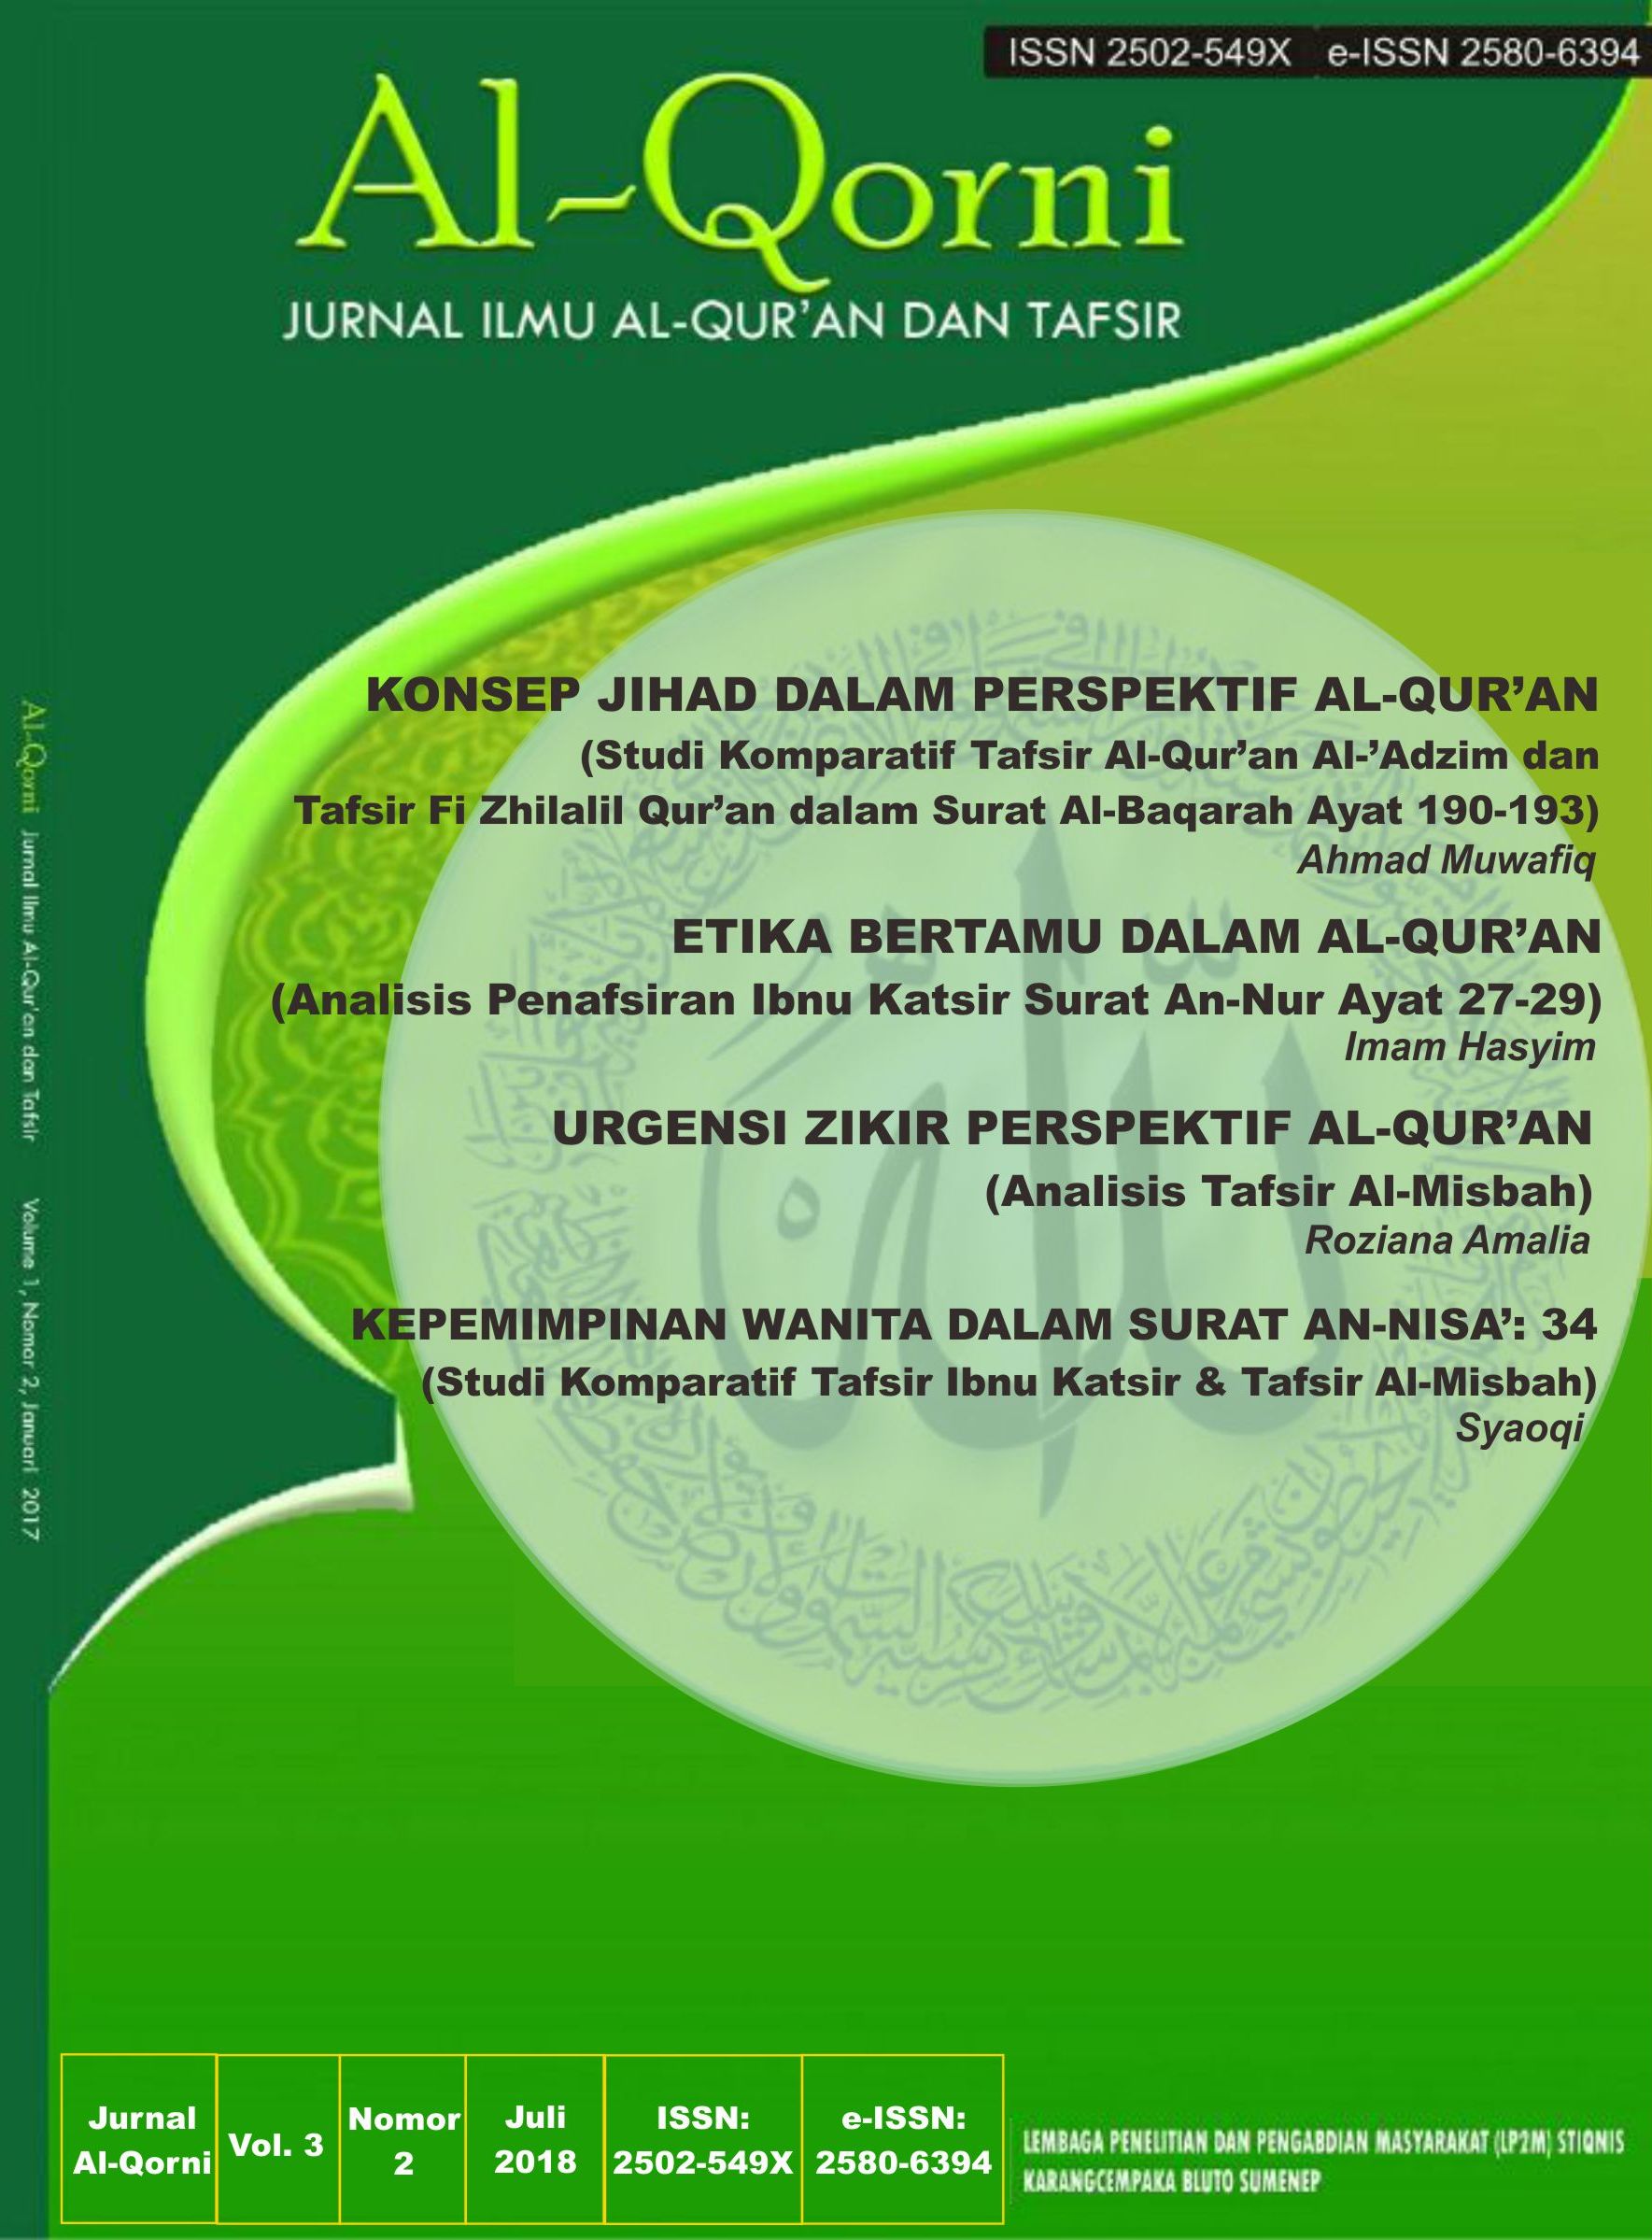 					Lihat Vol 3 No 2 (2018): Jurnal Ilmu Al-Qur'an dan Tafsir
				